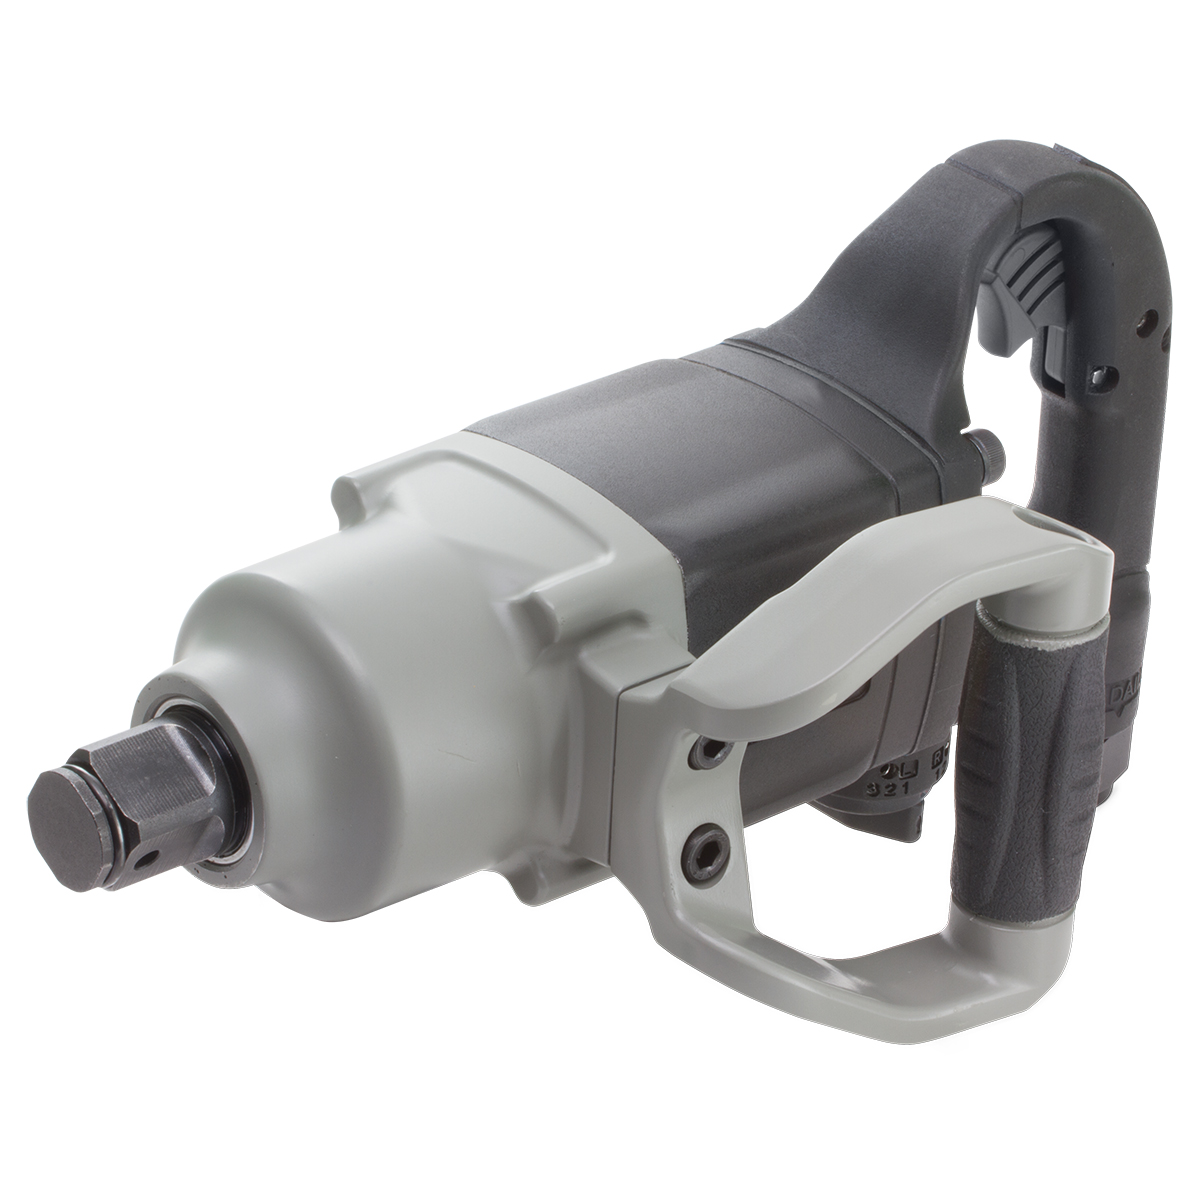 Details about  / KOPO KP-509 Air Impact Wrench 1//2 Inch Gun Pneumatic for Mechanic Lug Nuts Shop